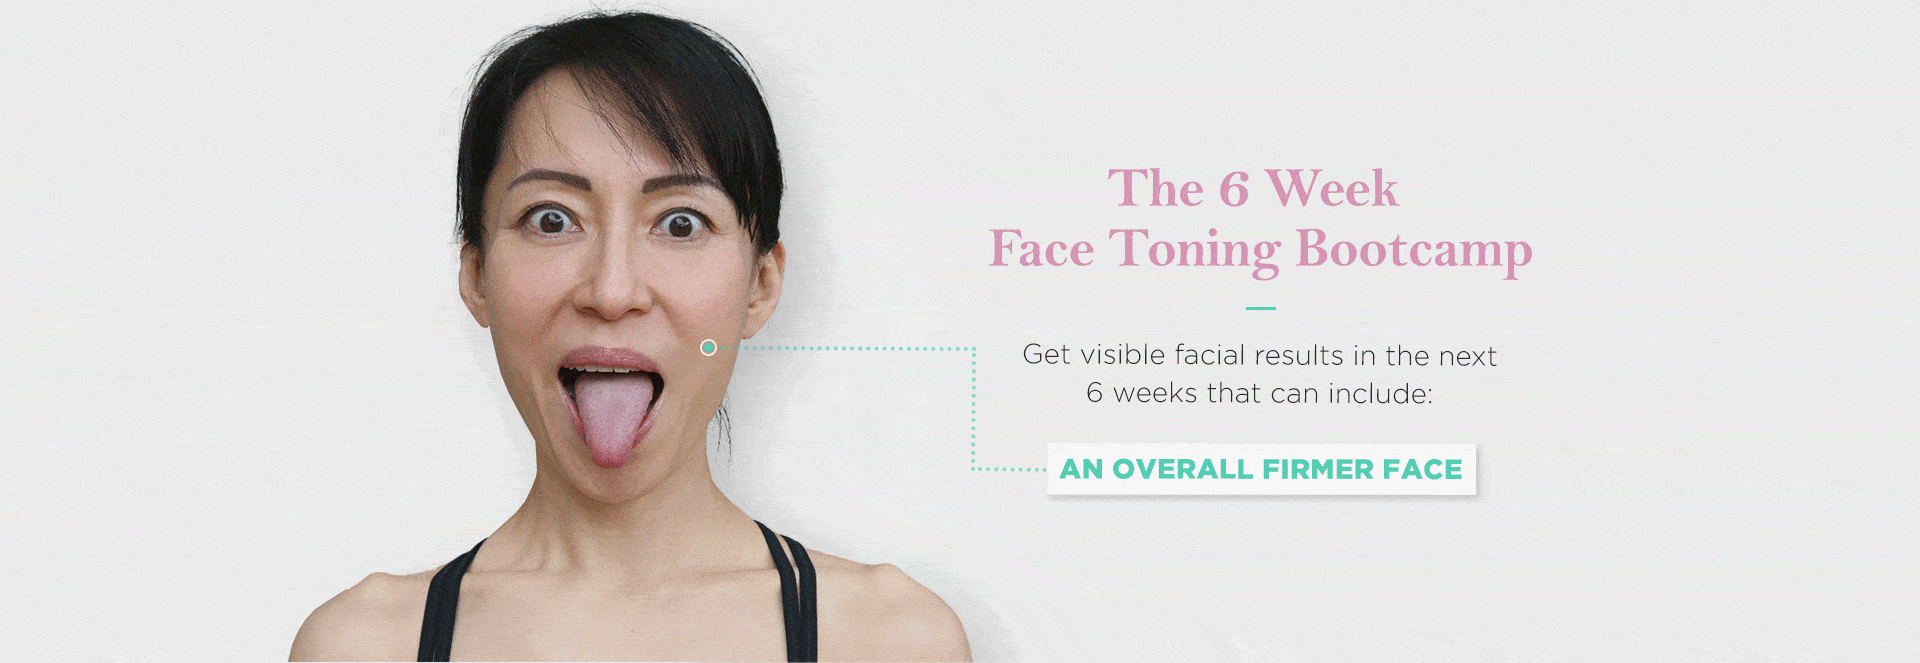 Face exercises to reduce wrinkles - face yoga anybody